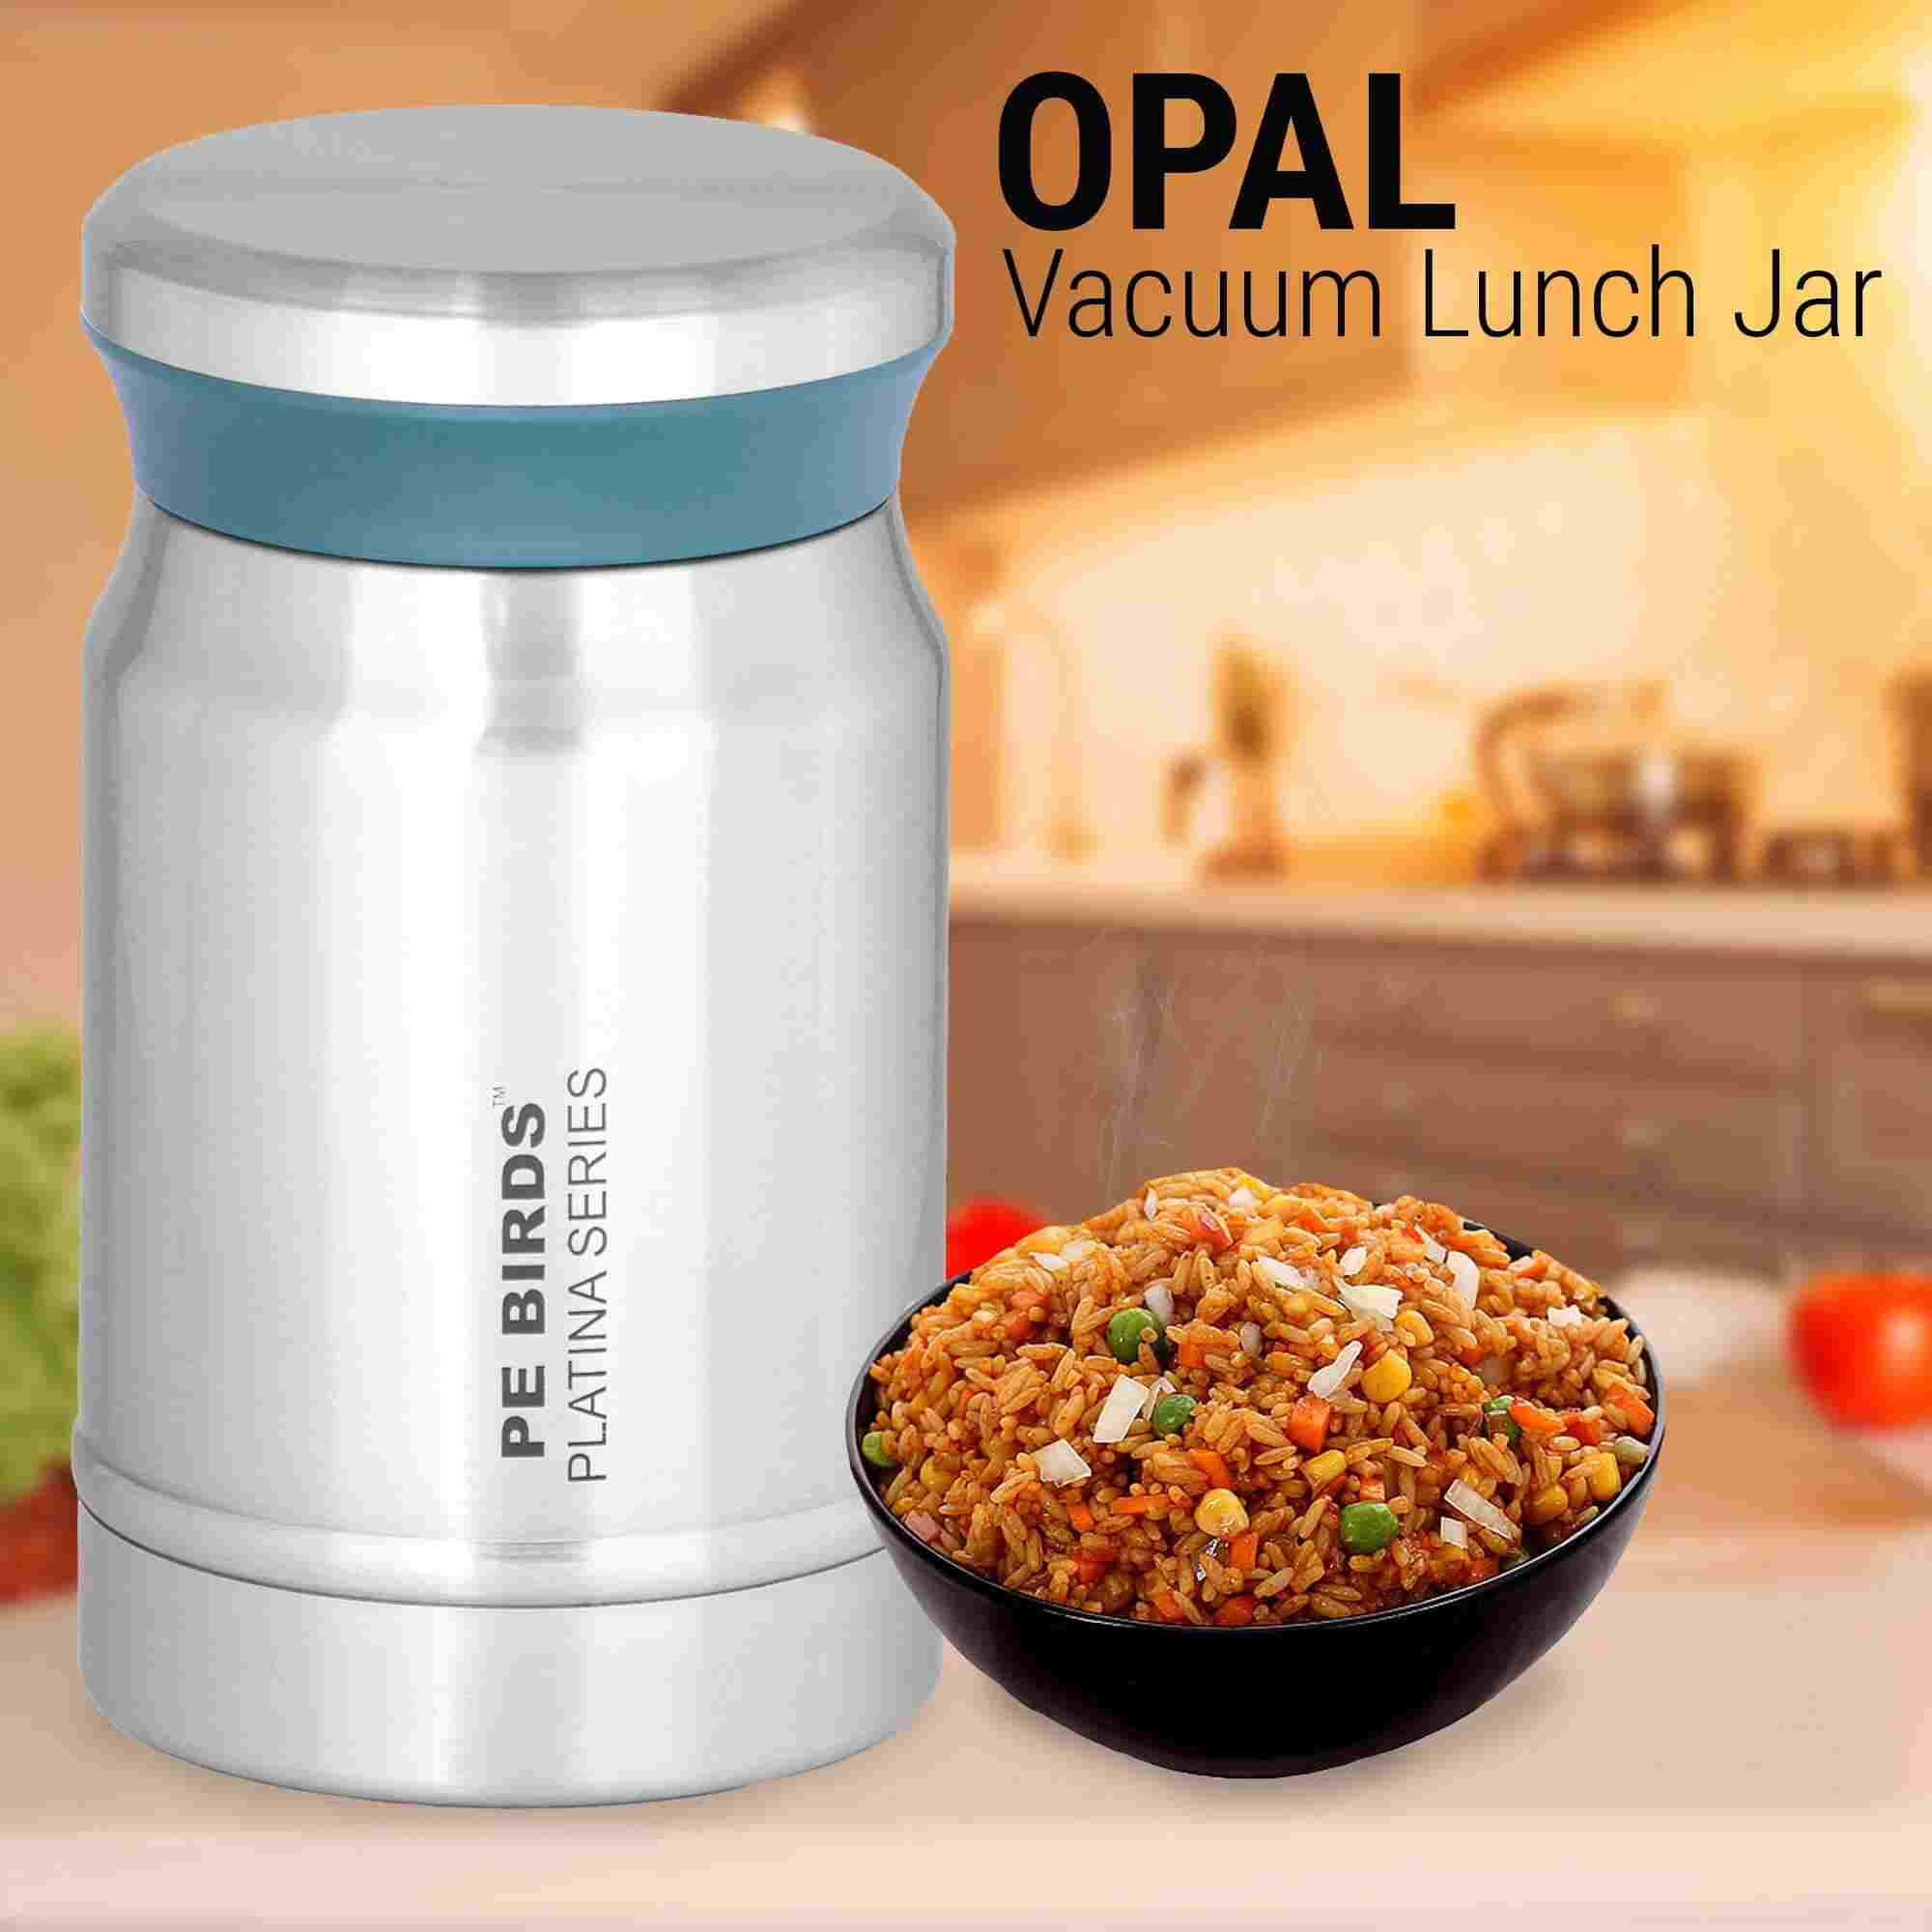 Opal Heavy Duty Vaccum Sambar Jar 550ml with Unique Carry Bag